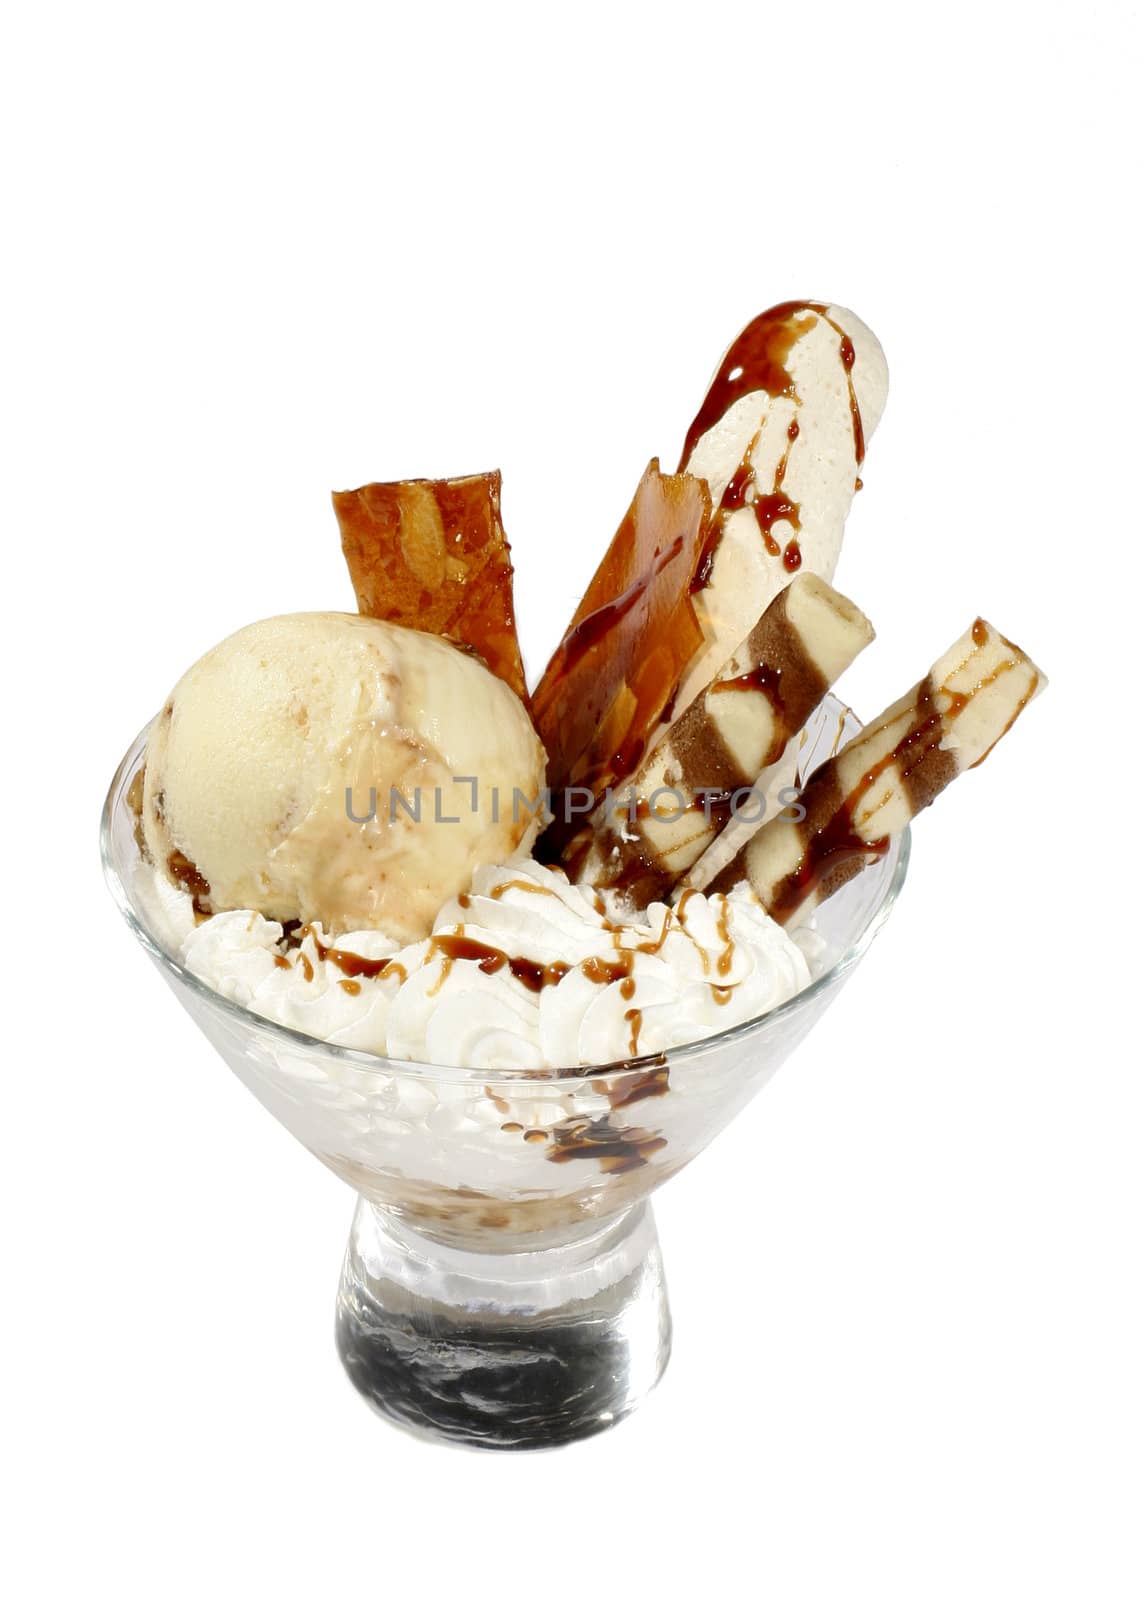 dessert with caramel and vanila icecream